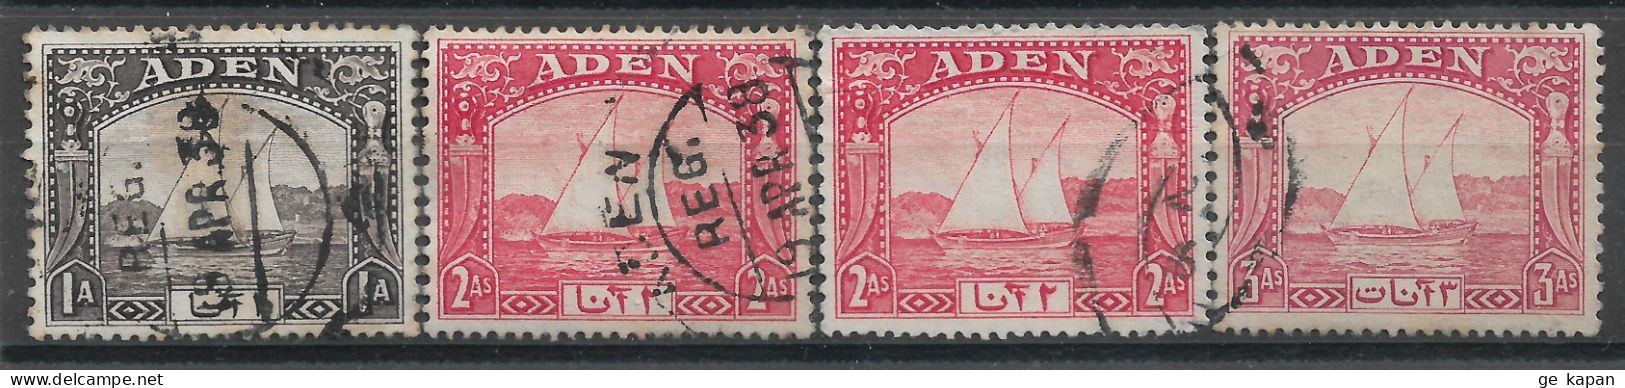 1937,1953 ADEN Set Of 2 USED STAMPS (Michel # 4,50) CV €3.20 - Aden (1854-1963)